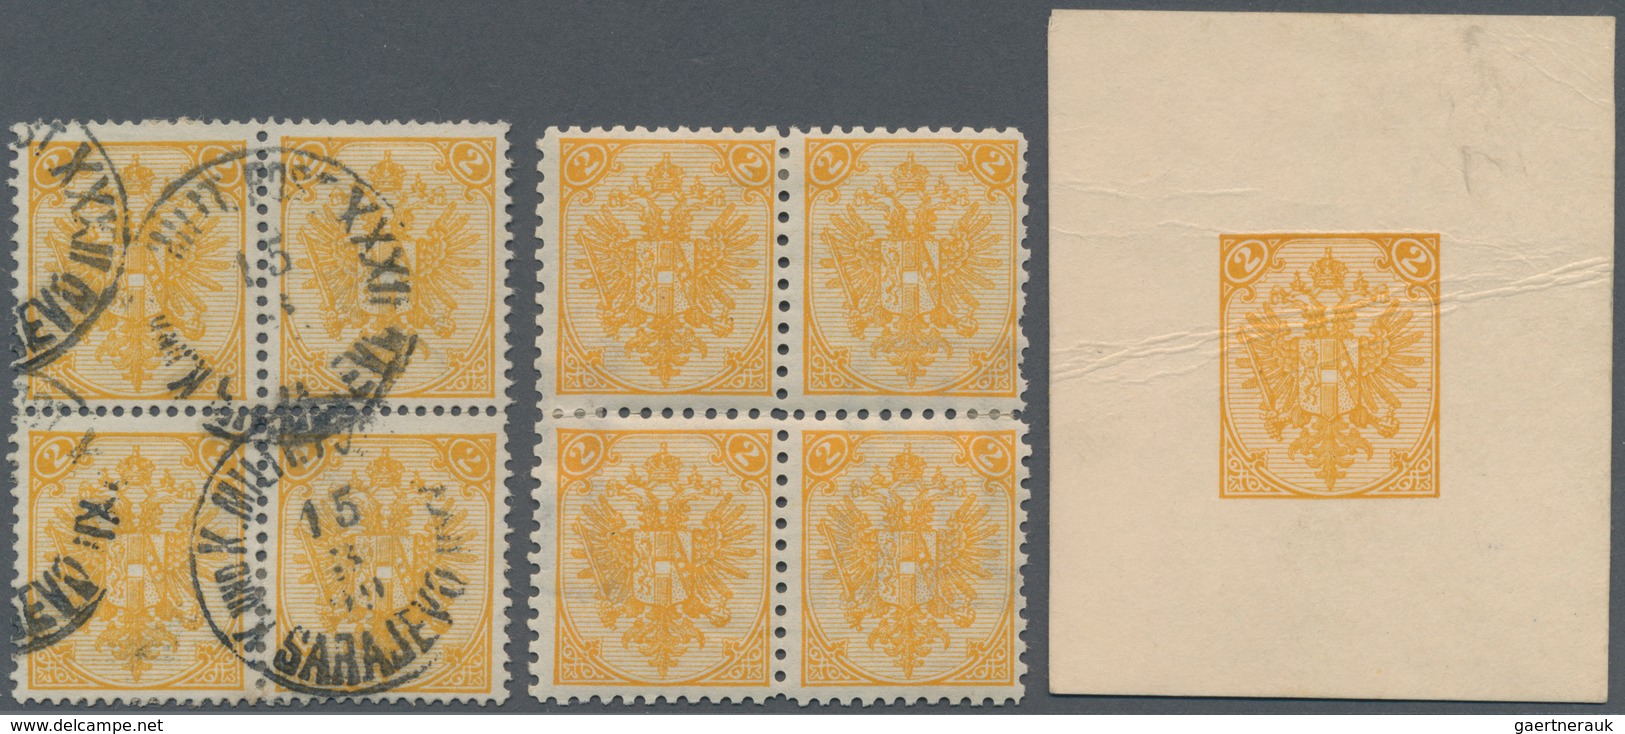 Bosnien Und Herzegowina: 1879/1899, Definitives "Double Eagle", 2kr. Yellow, Specialised Assortment - Bosnia Herzegovina